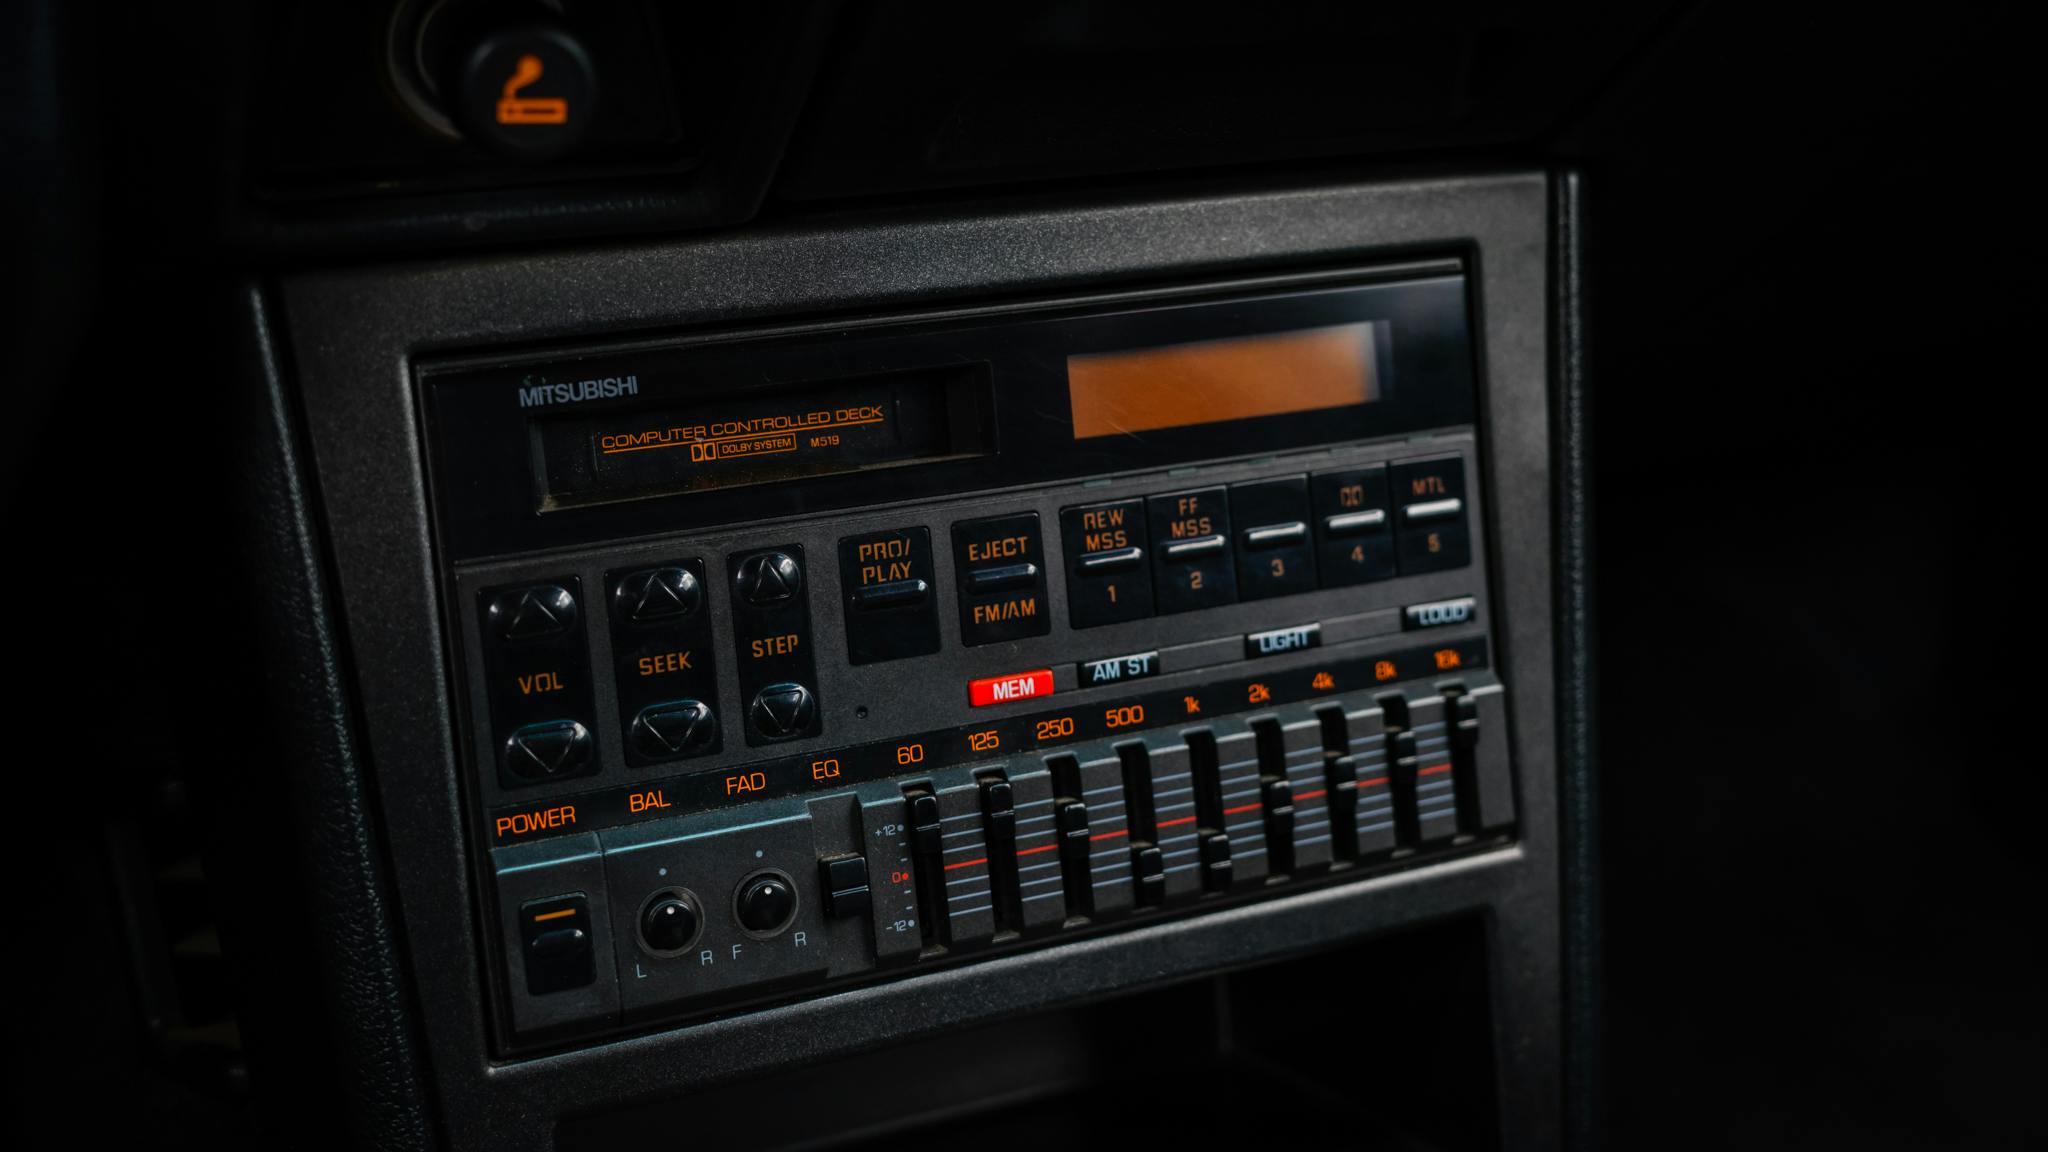 1988 Chrysler Conquest TSi interior radio